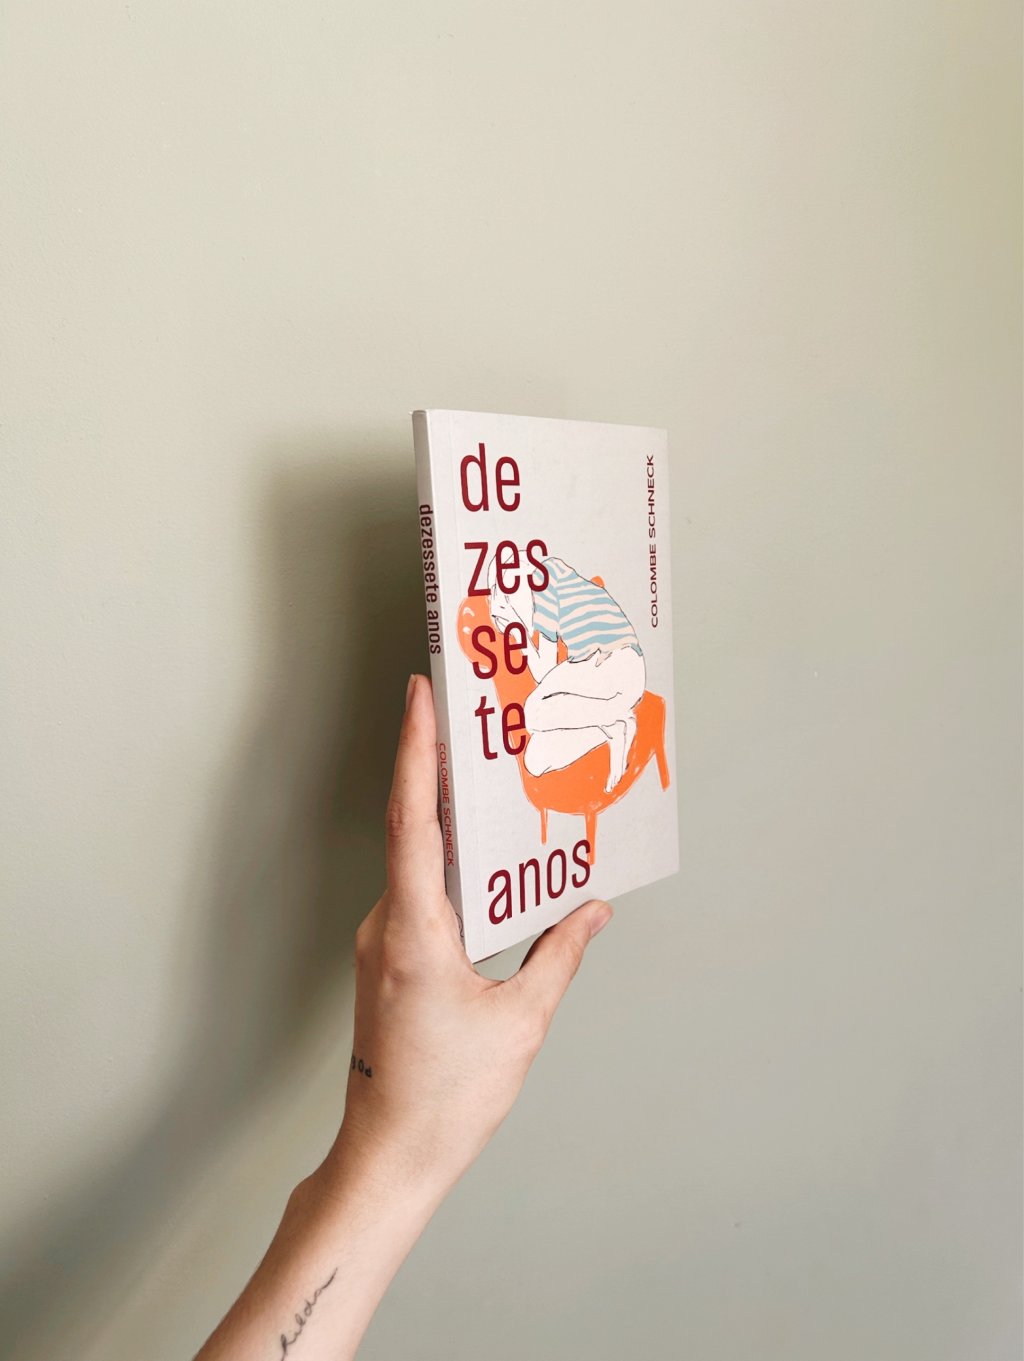 Livro "Dezessete Anos", da autora francesa Colombe Schneck